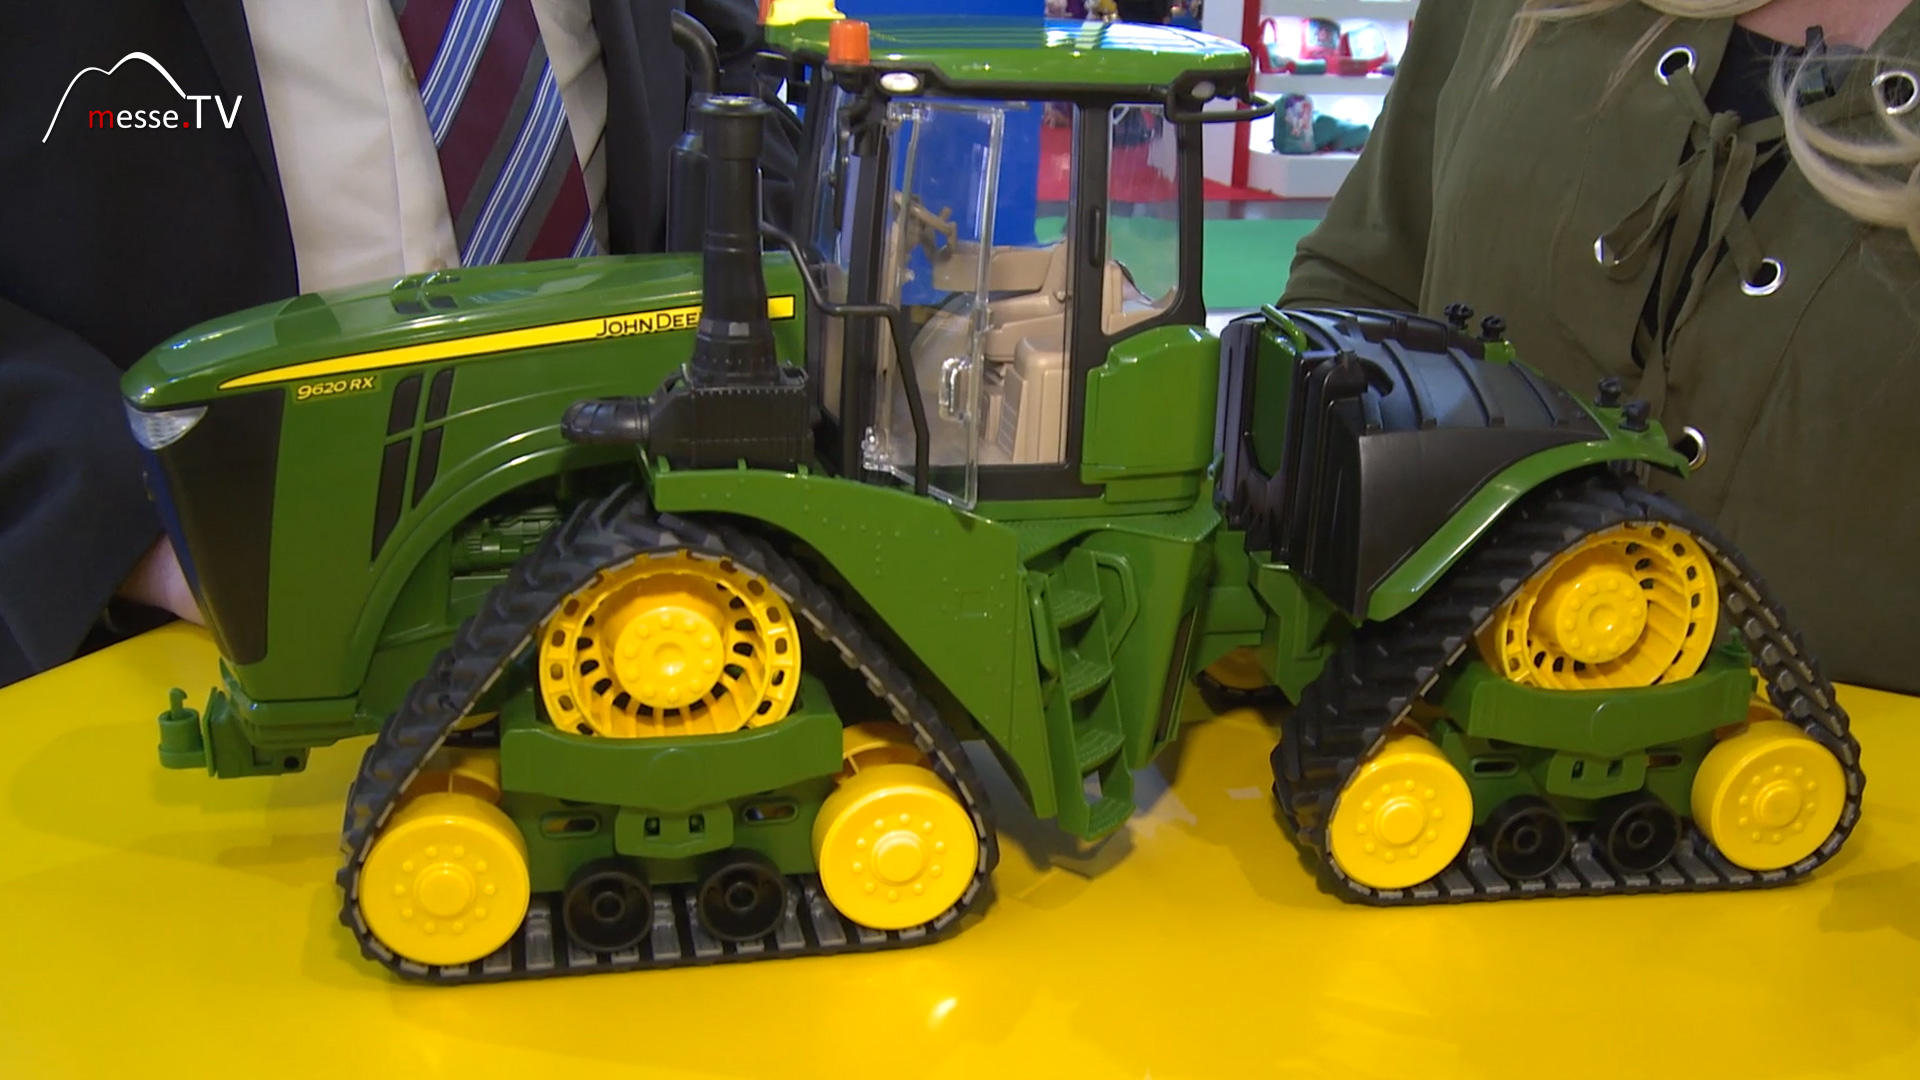 John Deere 9620RX toy excavator caterpillar drive Bruder